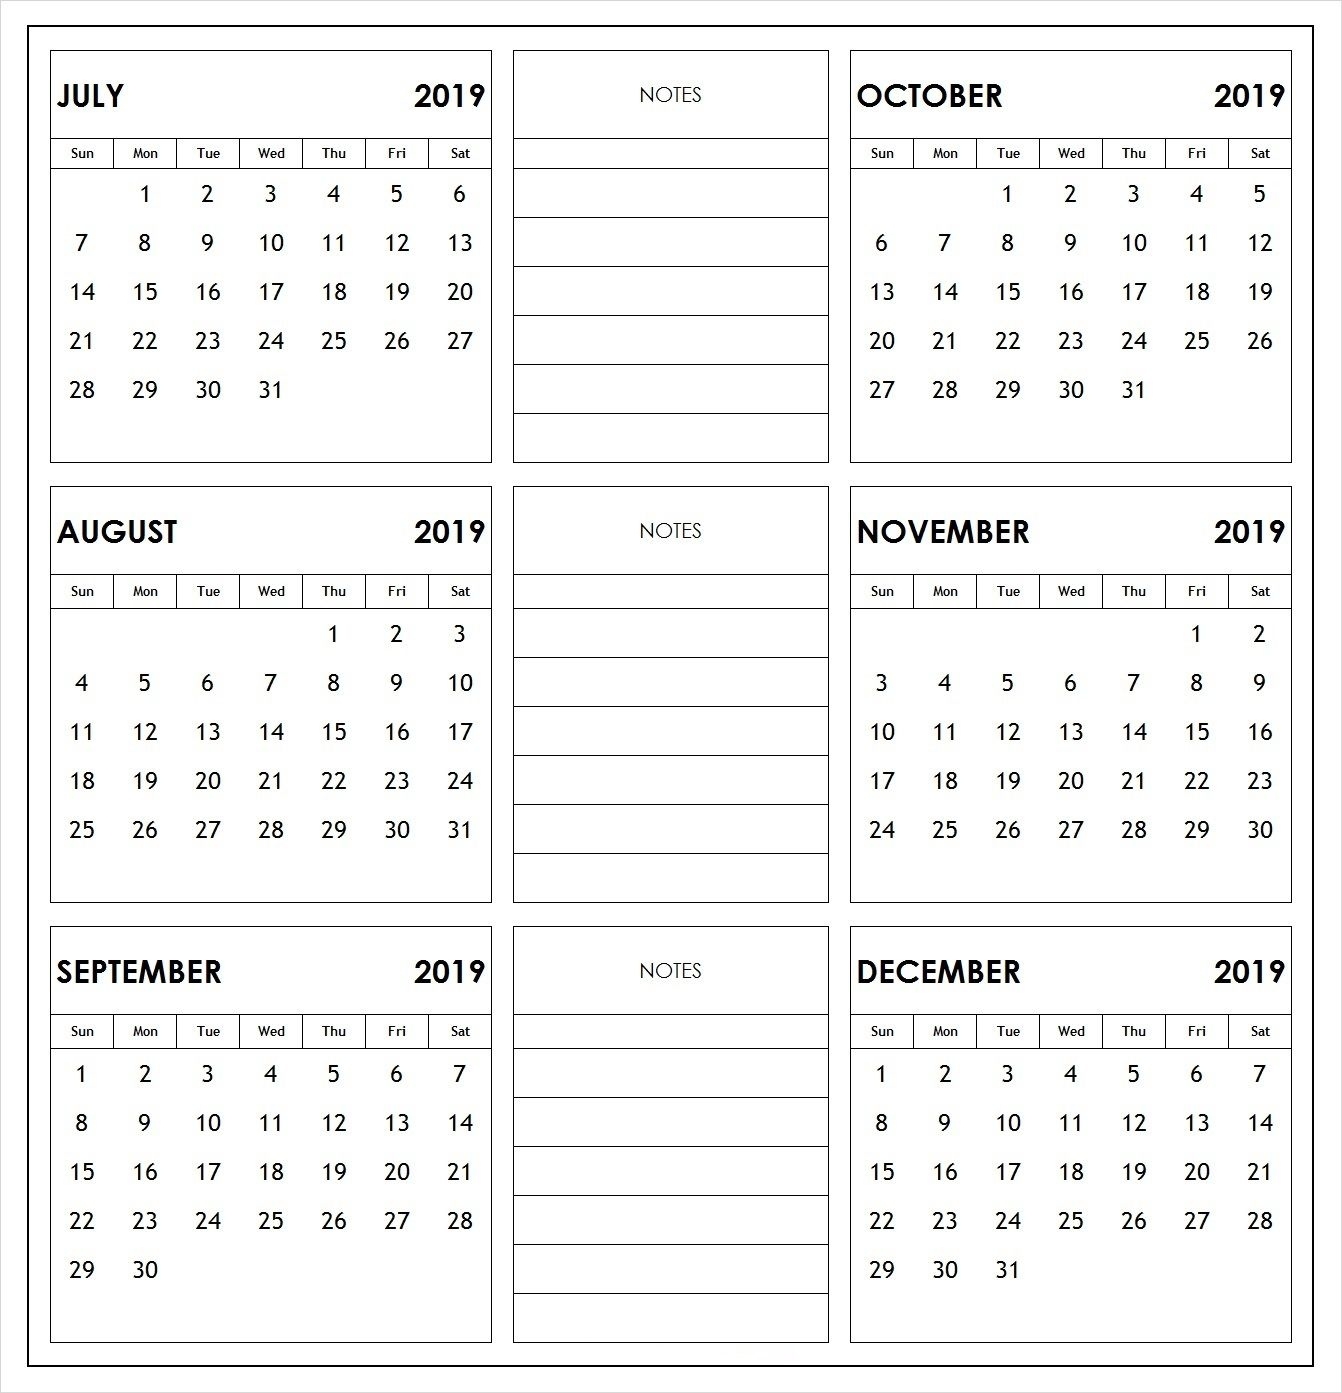 2019 Half Year Print Calendar | Print Calendar, 2019 Free 6 Month Calnader Template